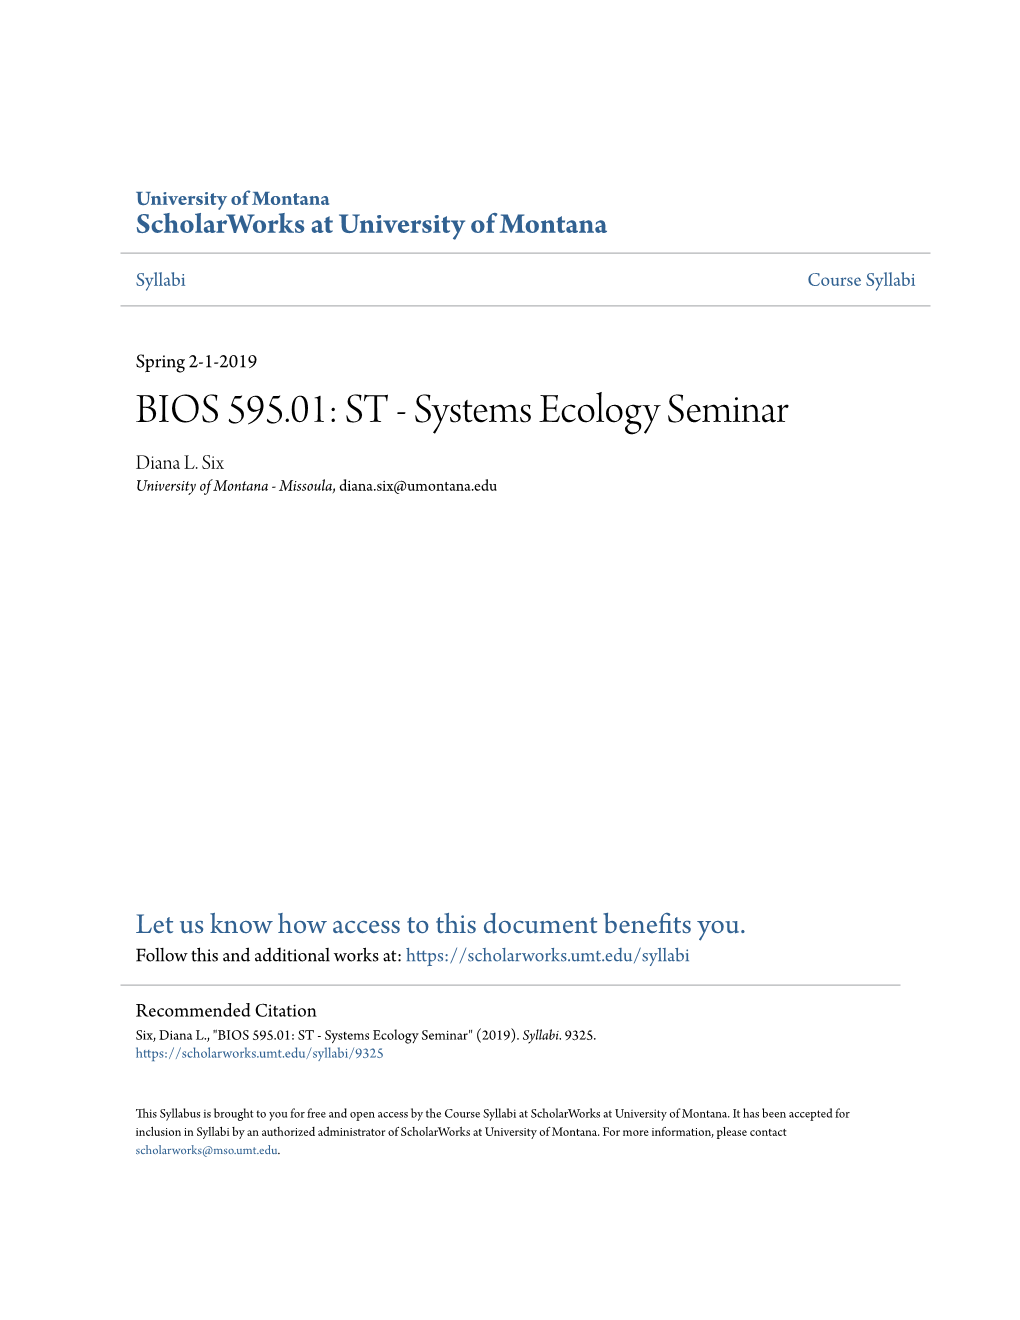 Systems Ecology Seminar Diana L